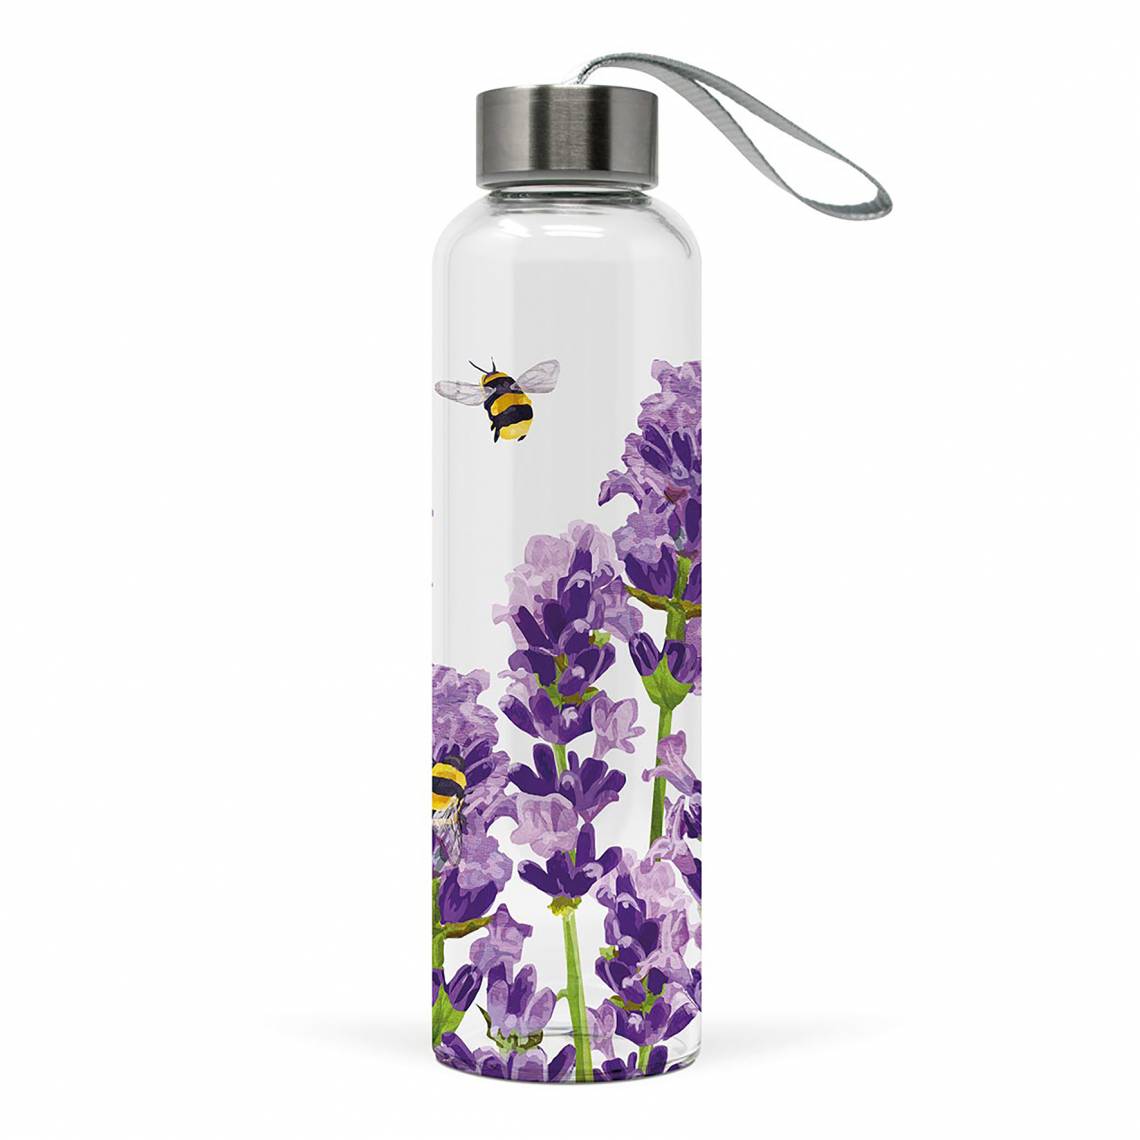 PPD 604307·Bees&Lavender, Glass Bottle